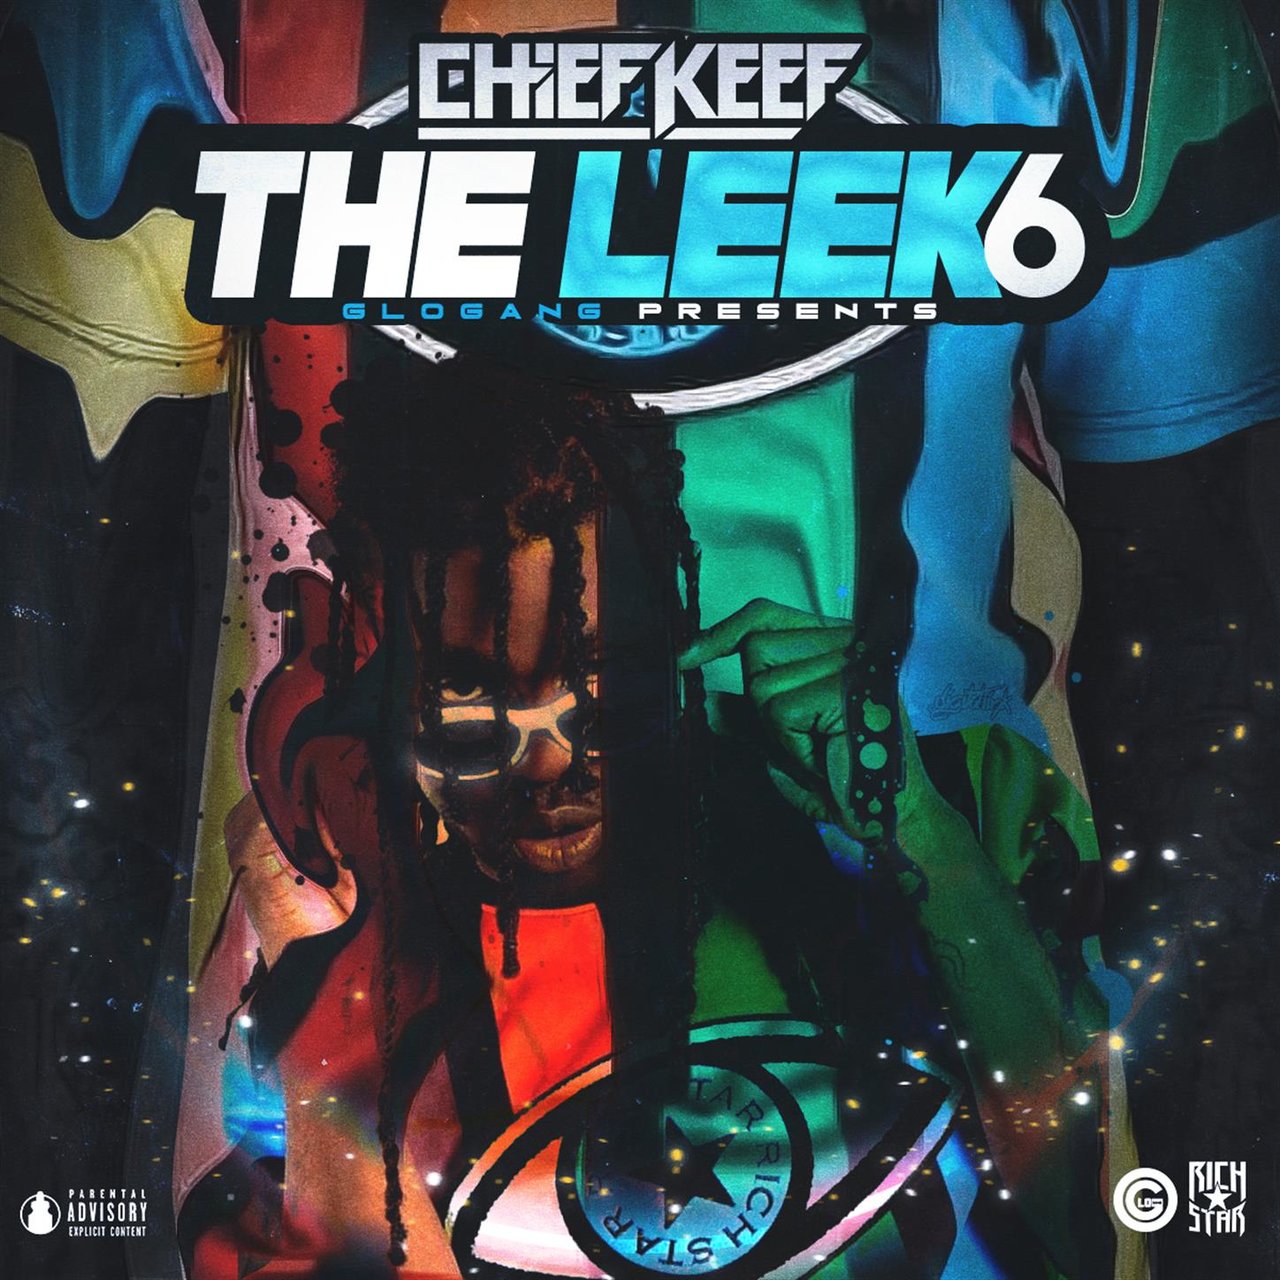 Chief Keef – The Leek, Vol. 6 [Mixtape]